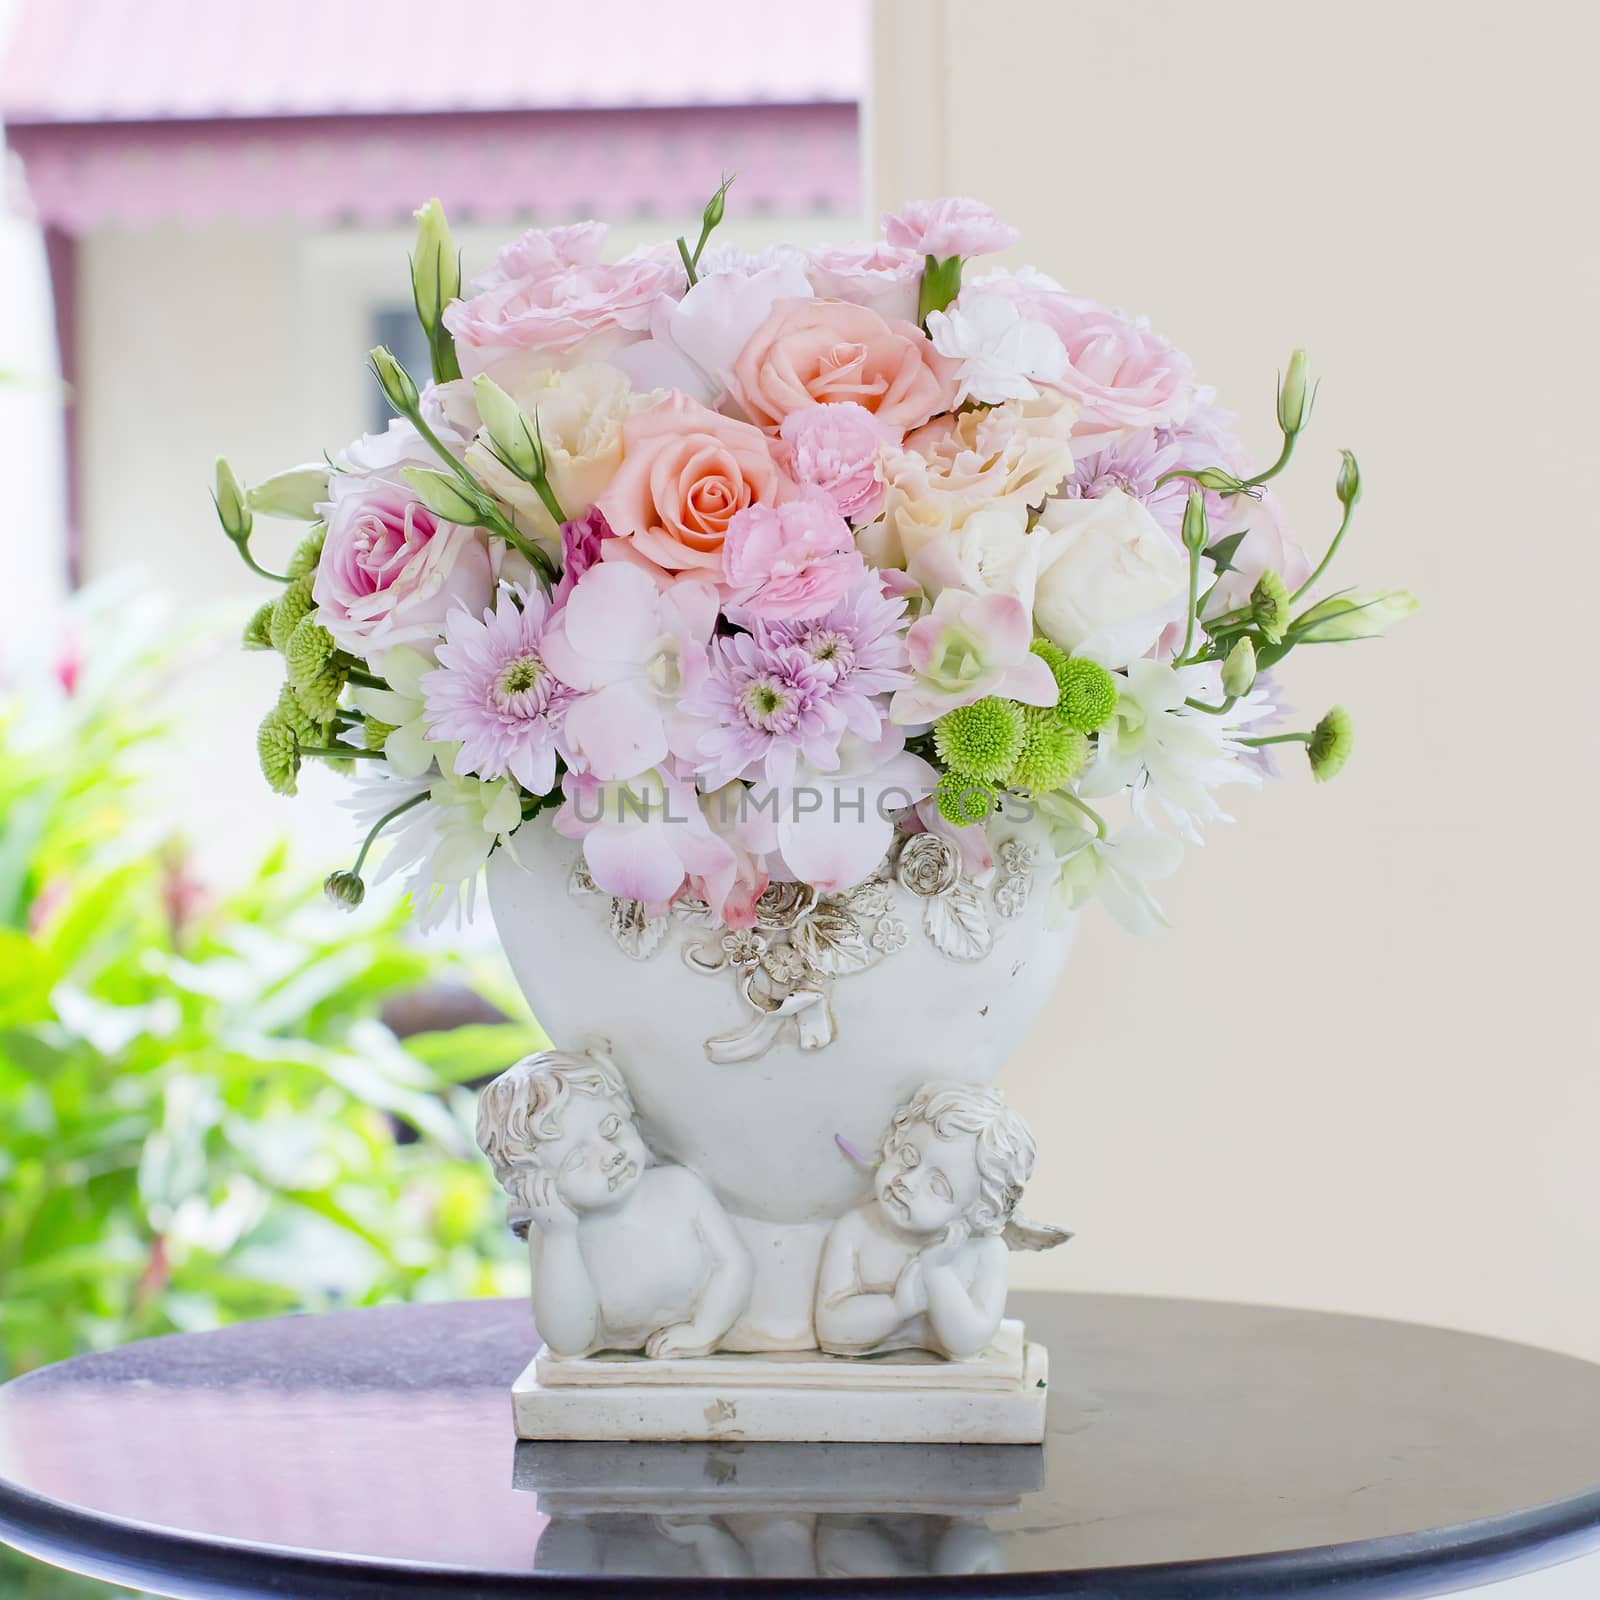 Beautiful flowers in vases by art9858